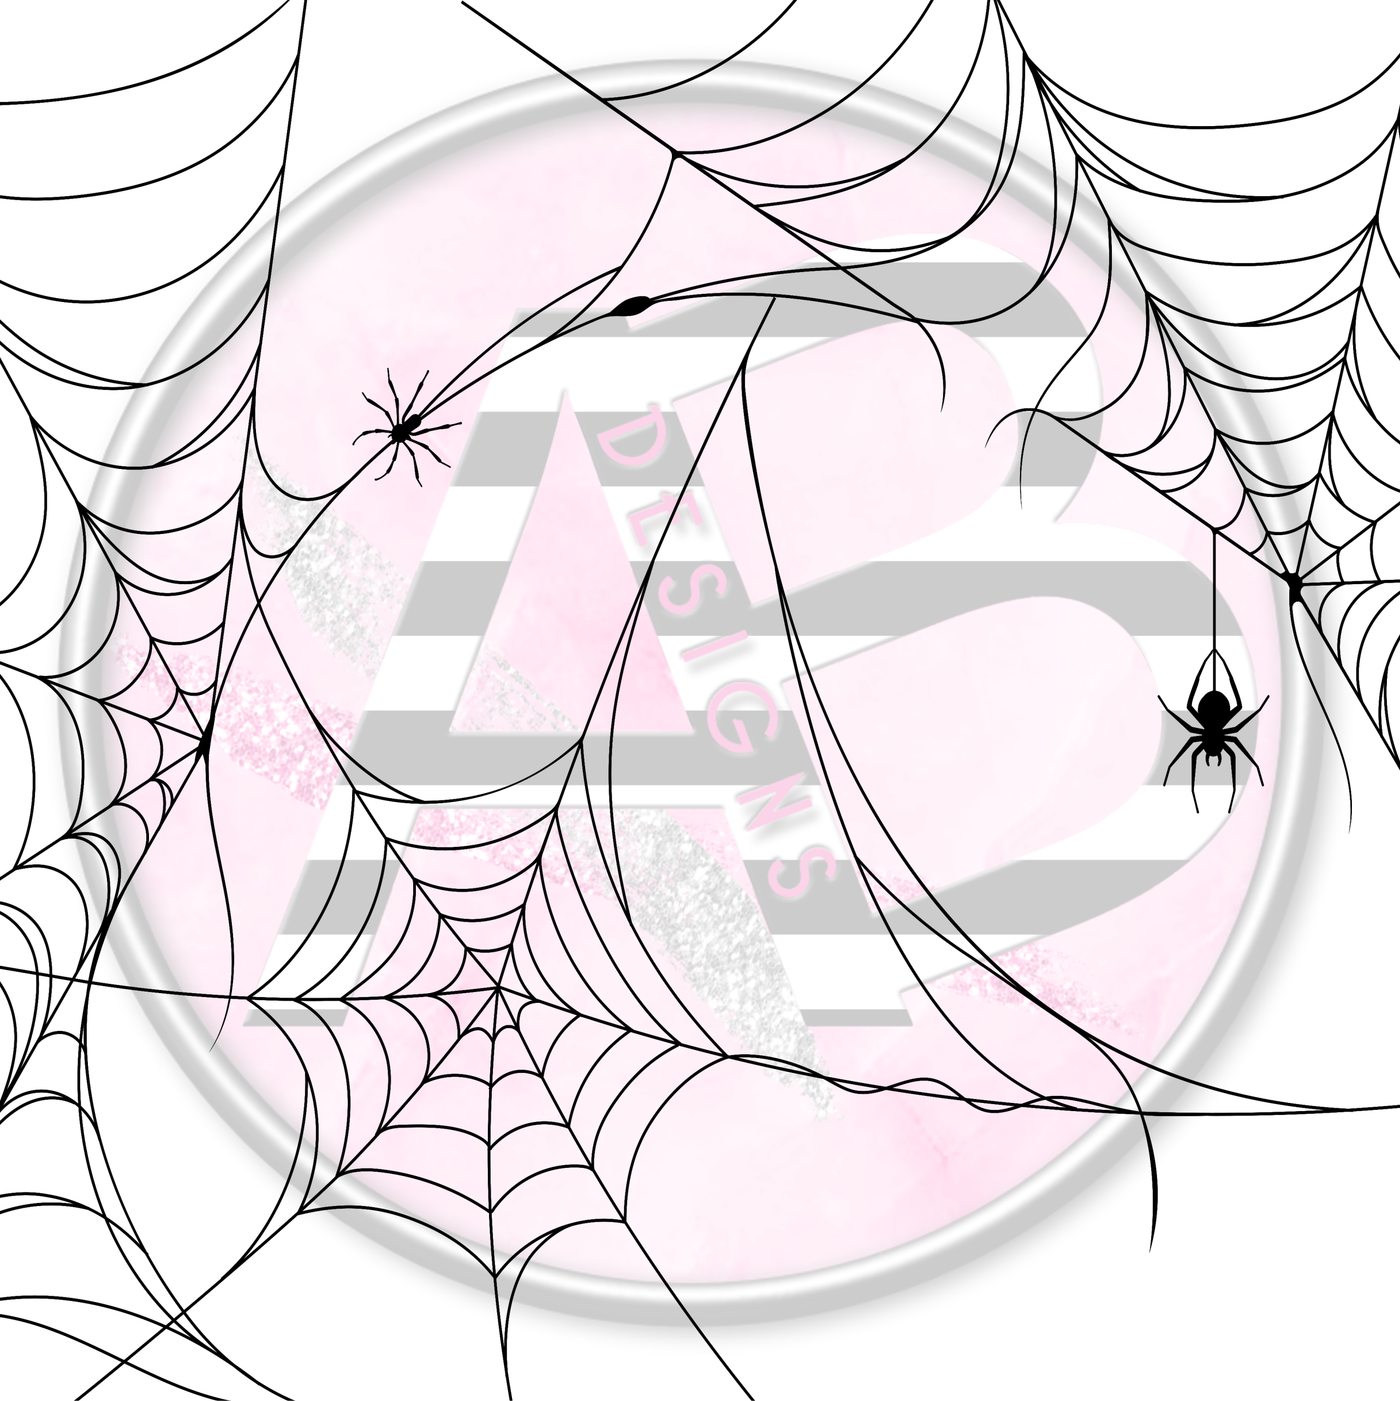 Adhesive Patterned Vinyl -Spider Web 06